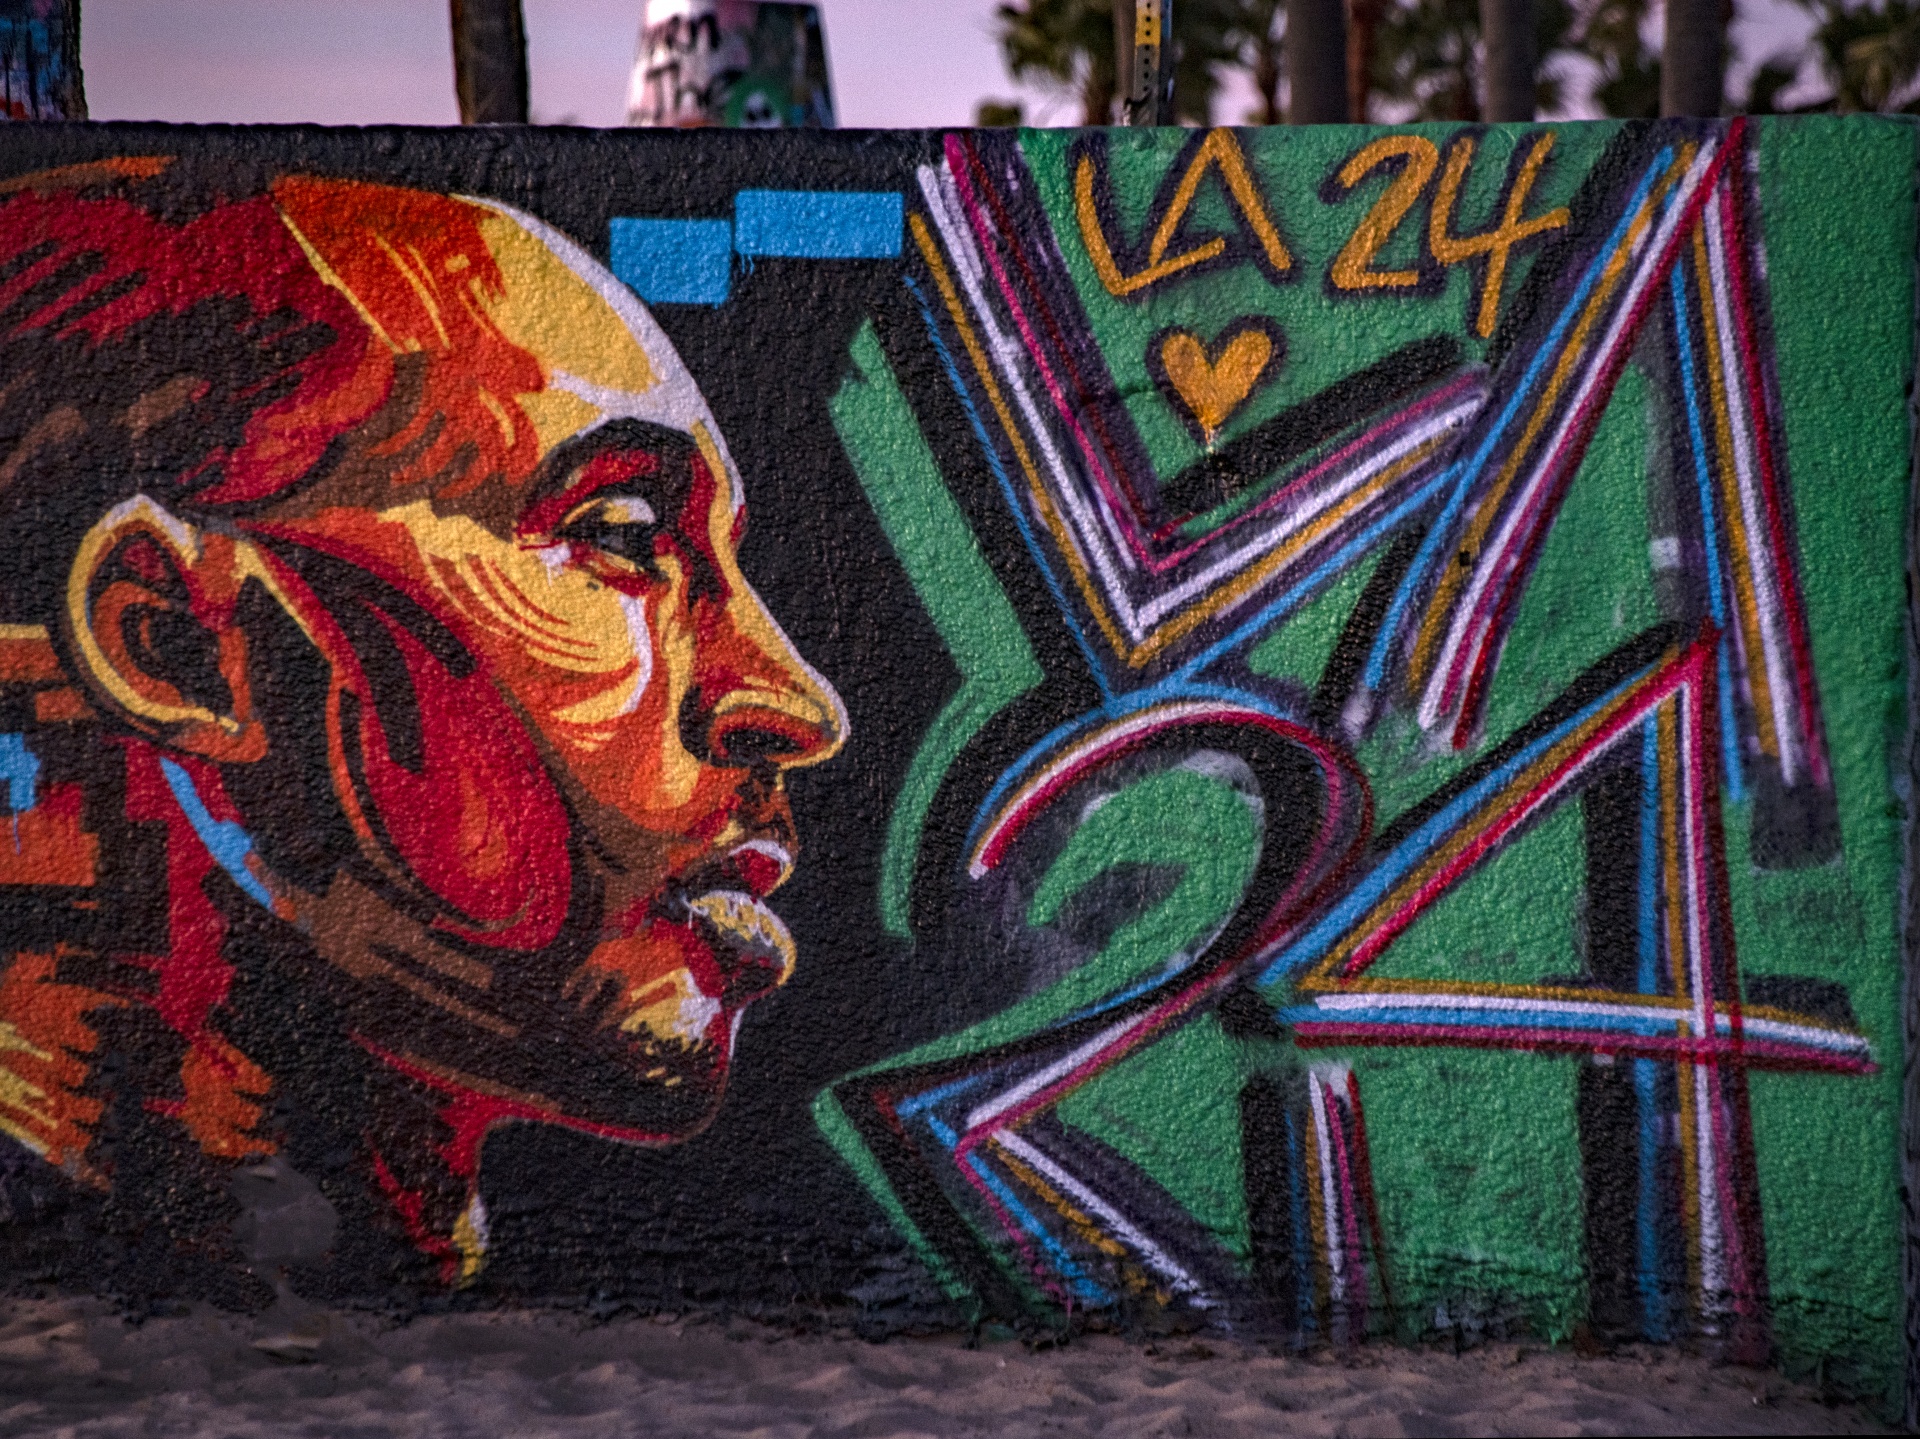 Kobe Bryant mural in Santa Monica, Los Angeles, California. Painted by a fan in graffiti style